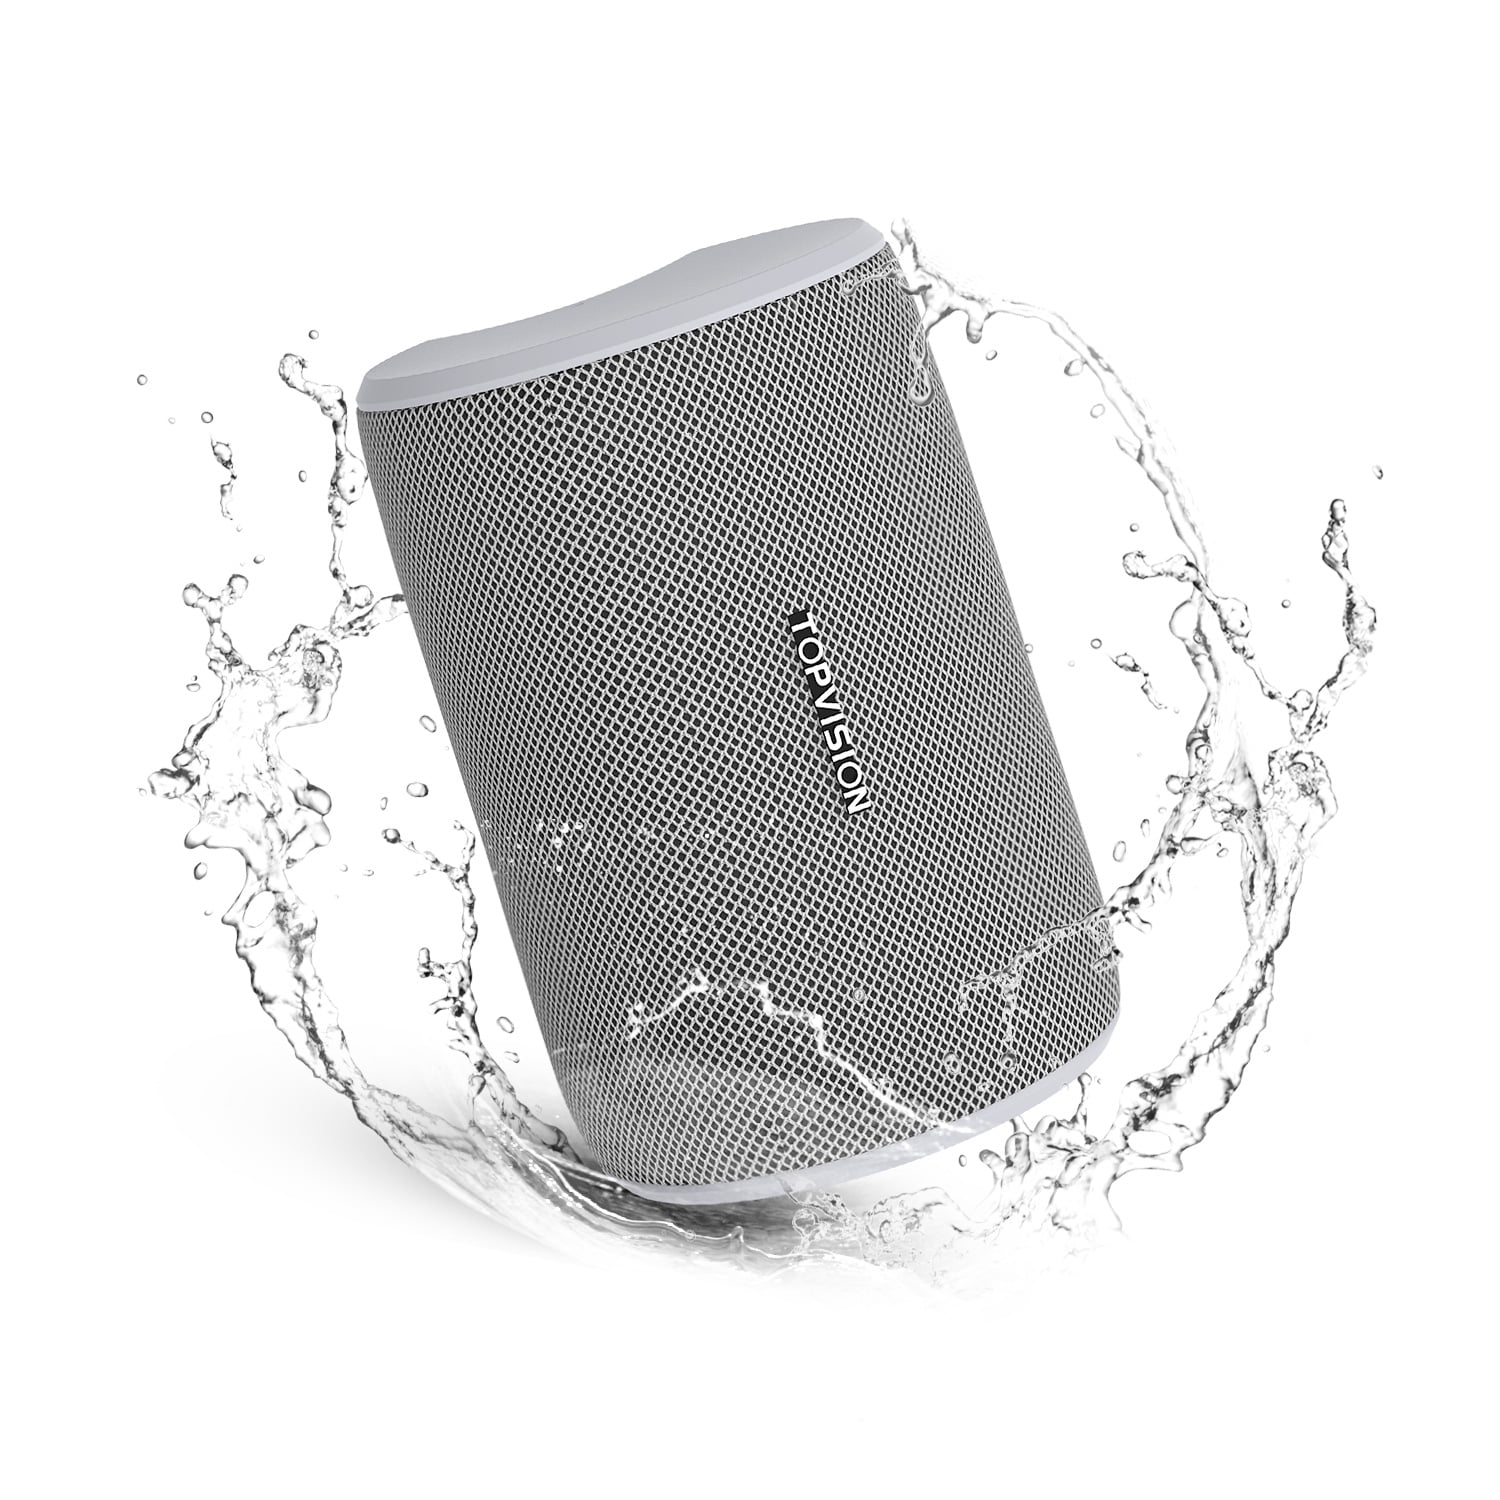 iHome iBT3 Splashproof Wireless Bluetooth Speaker with Speakerphone Black/Gray 